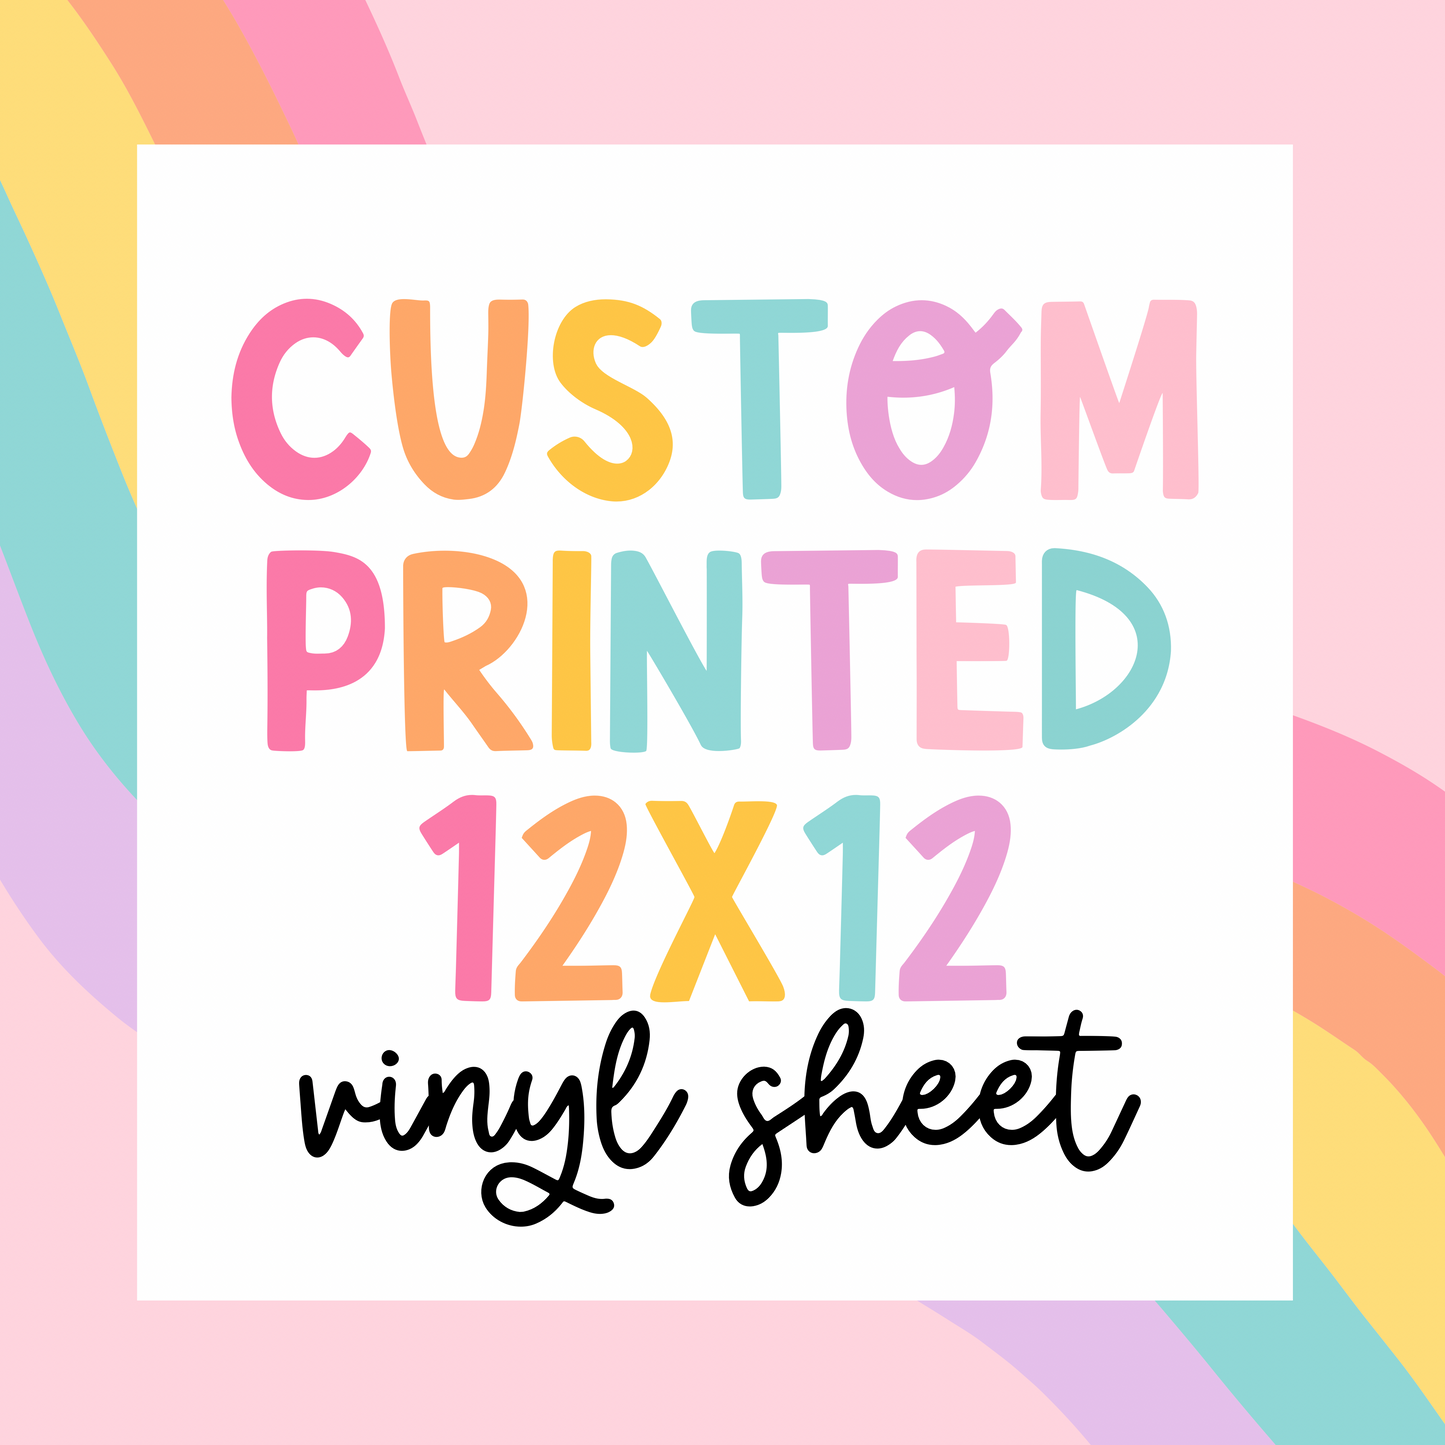 Custom Printed Vinyl 12"x12" Sheet